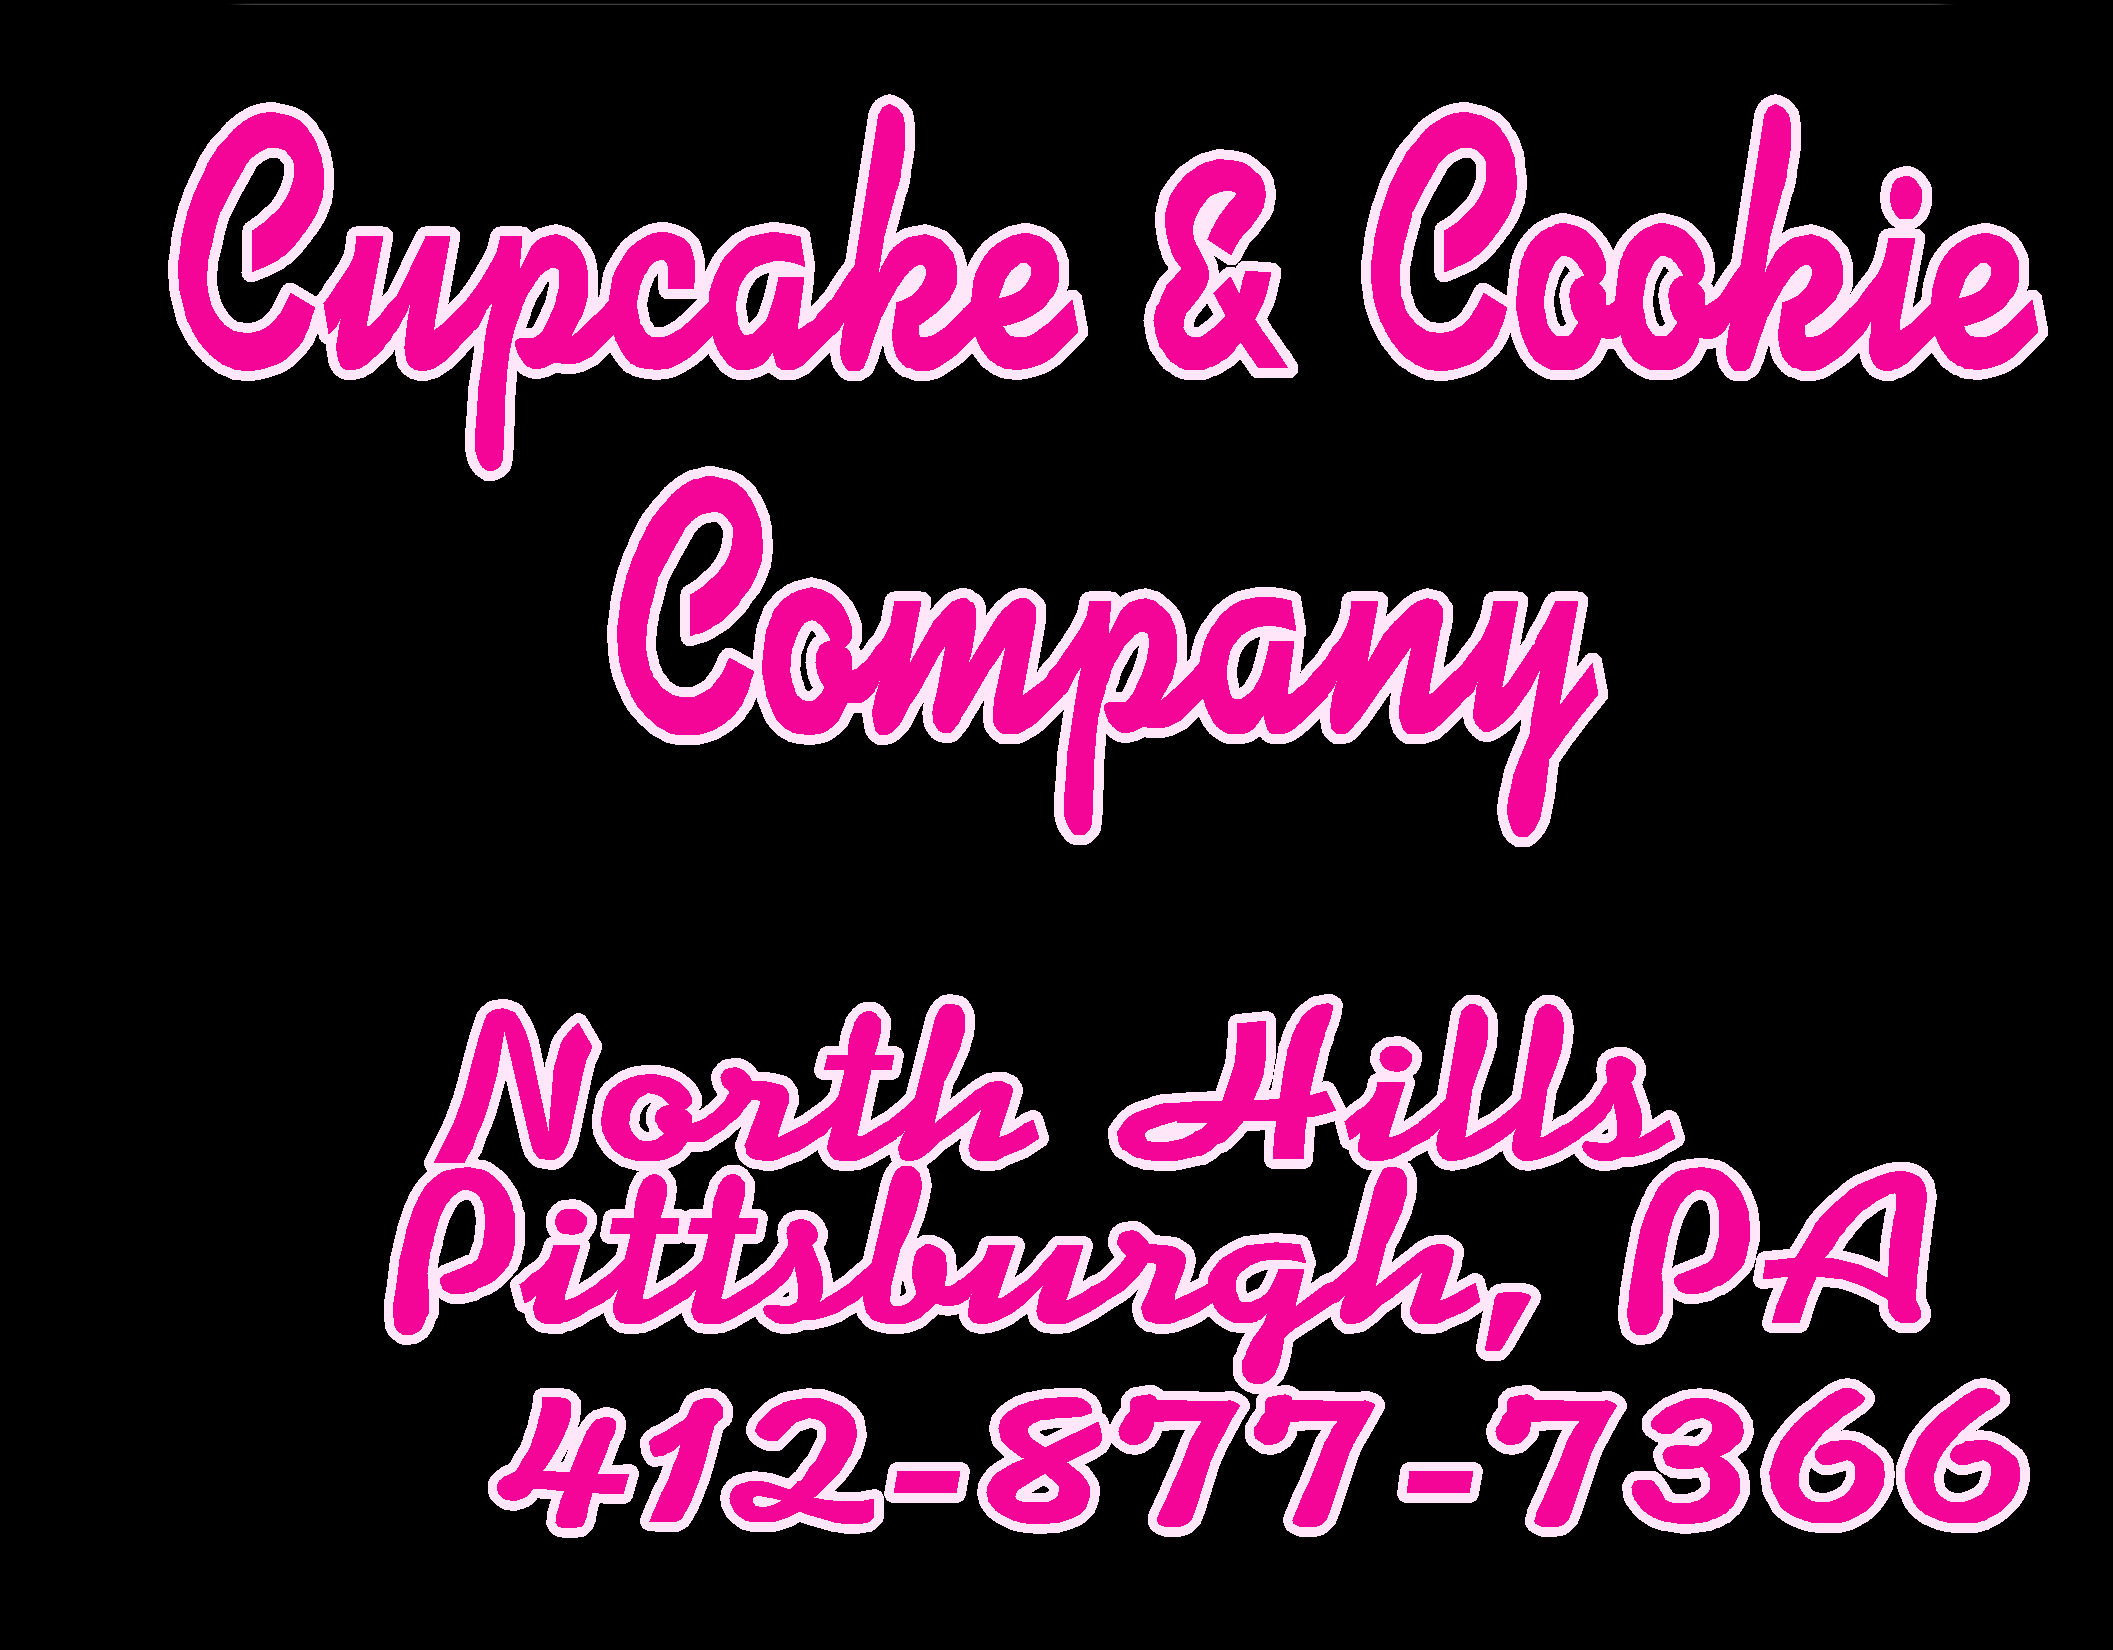 Cupcake & Cookie Company 412-877-7366